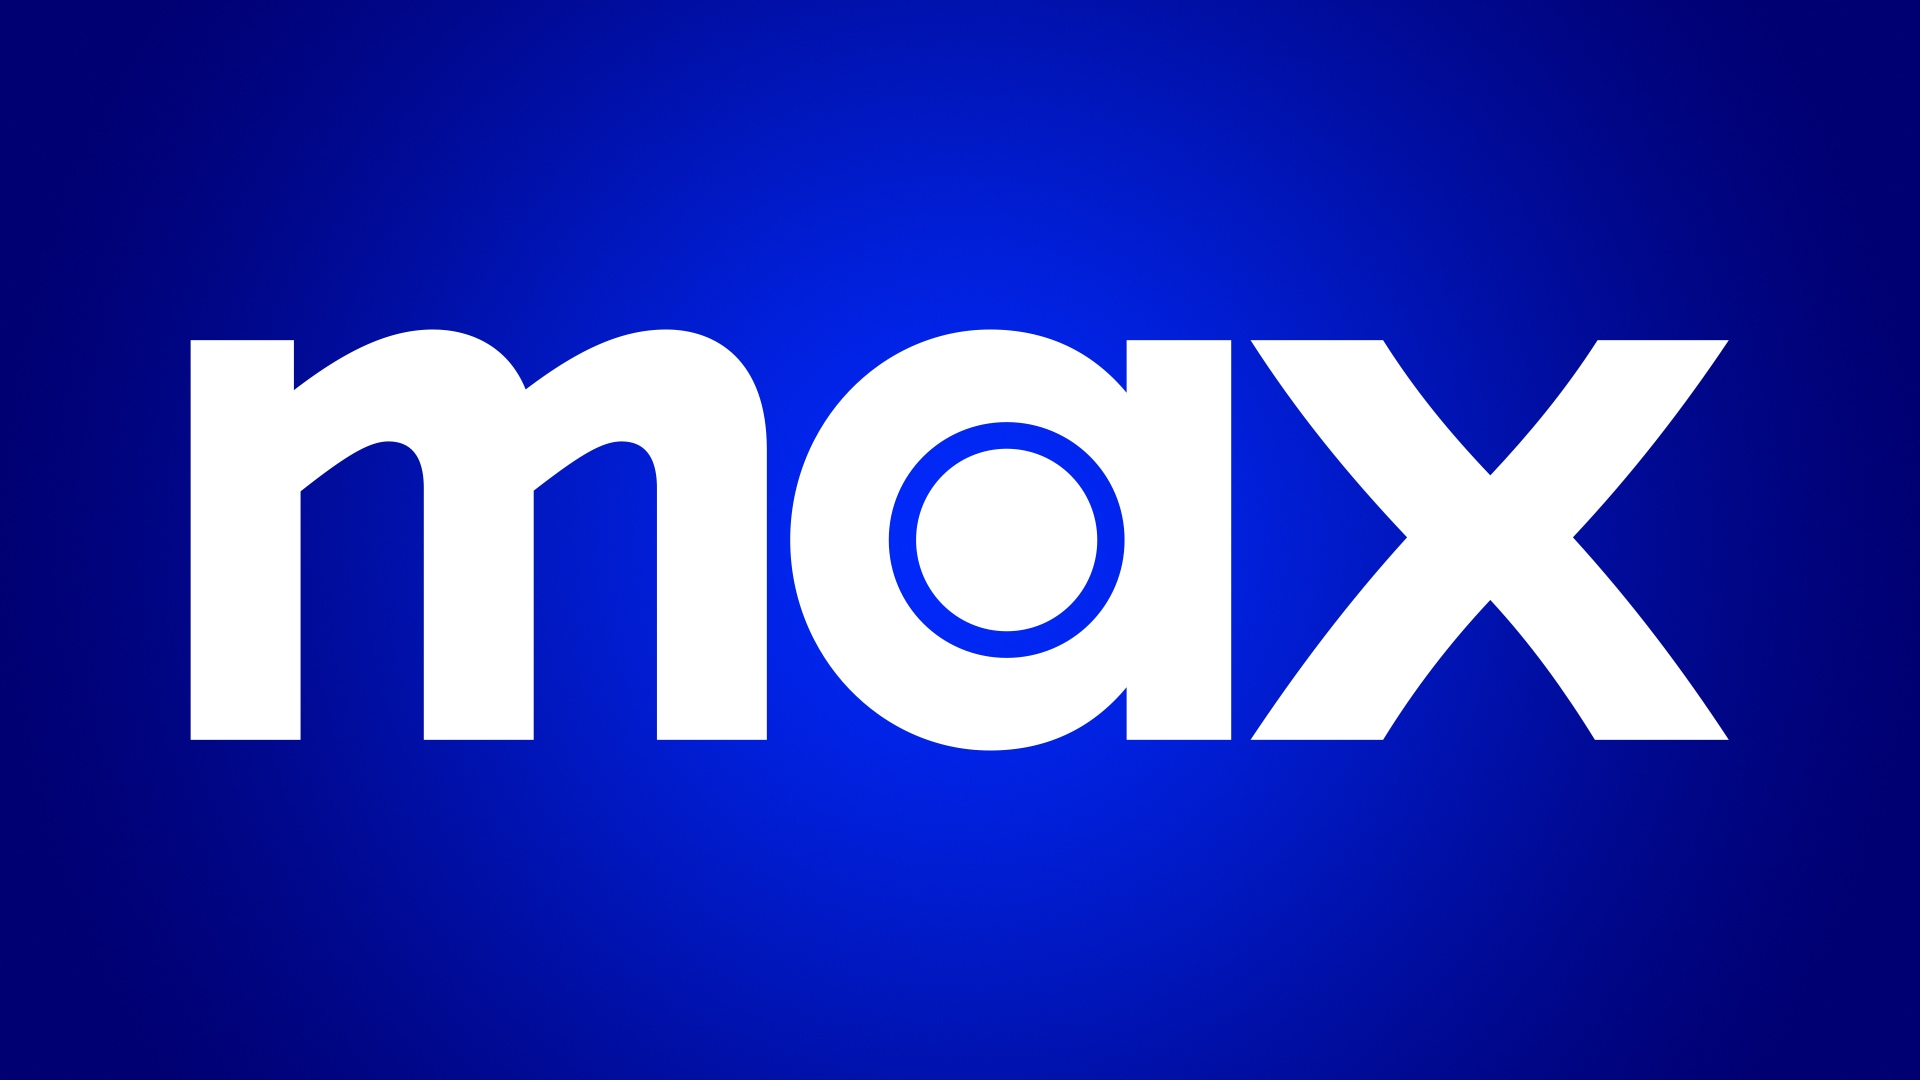 White Max streaming app logo set against a dark blue gradient background